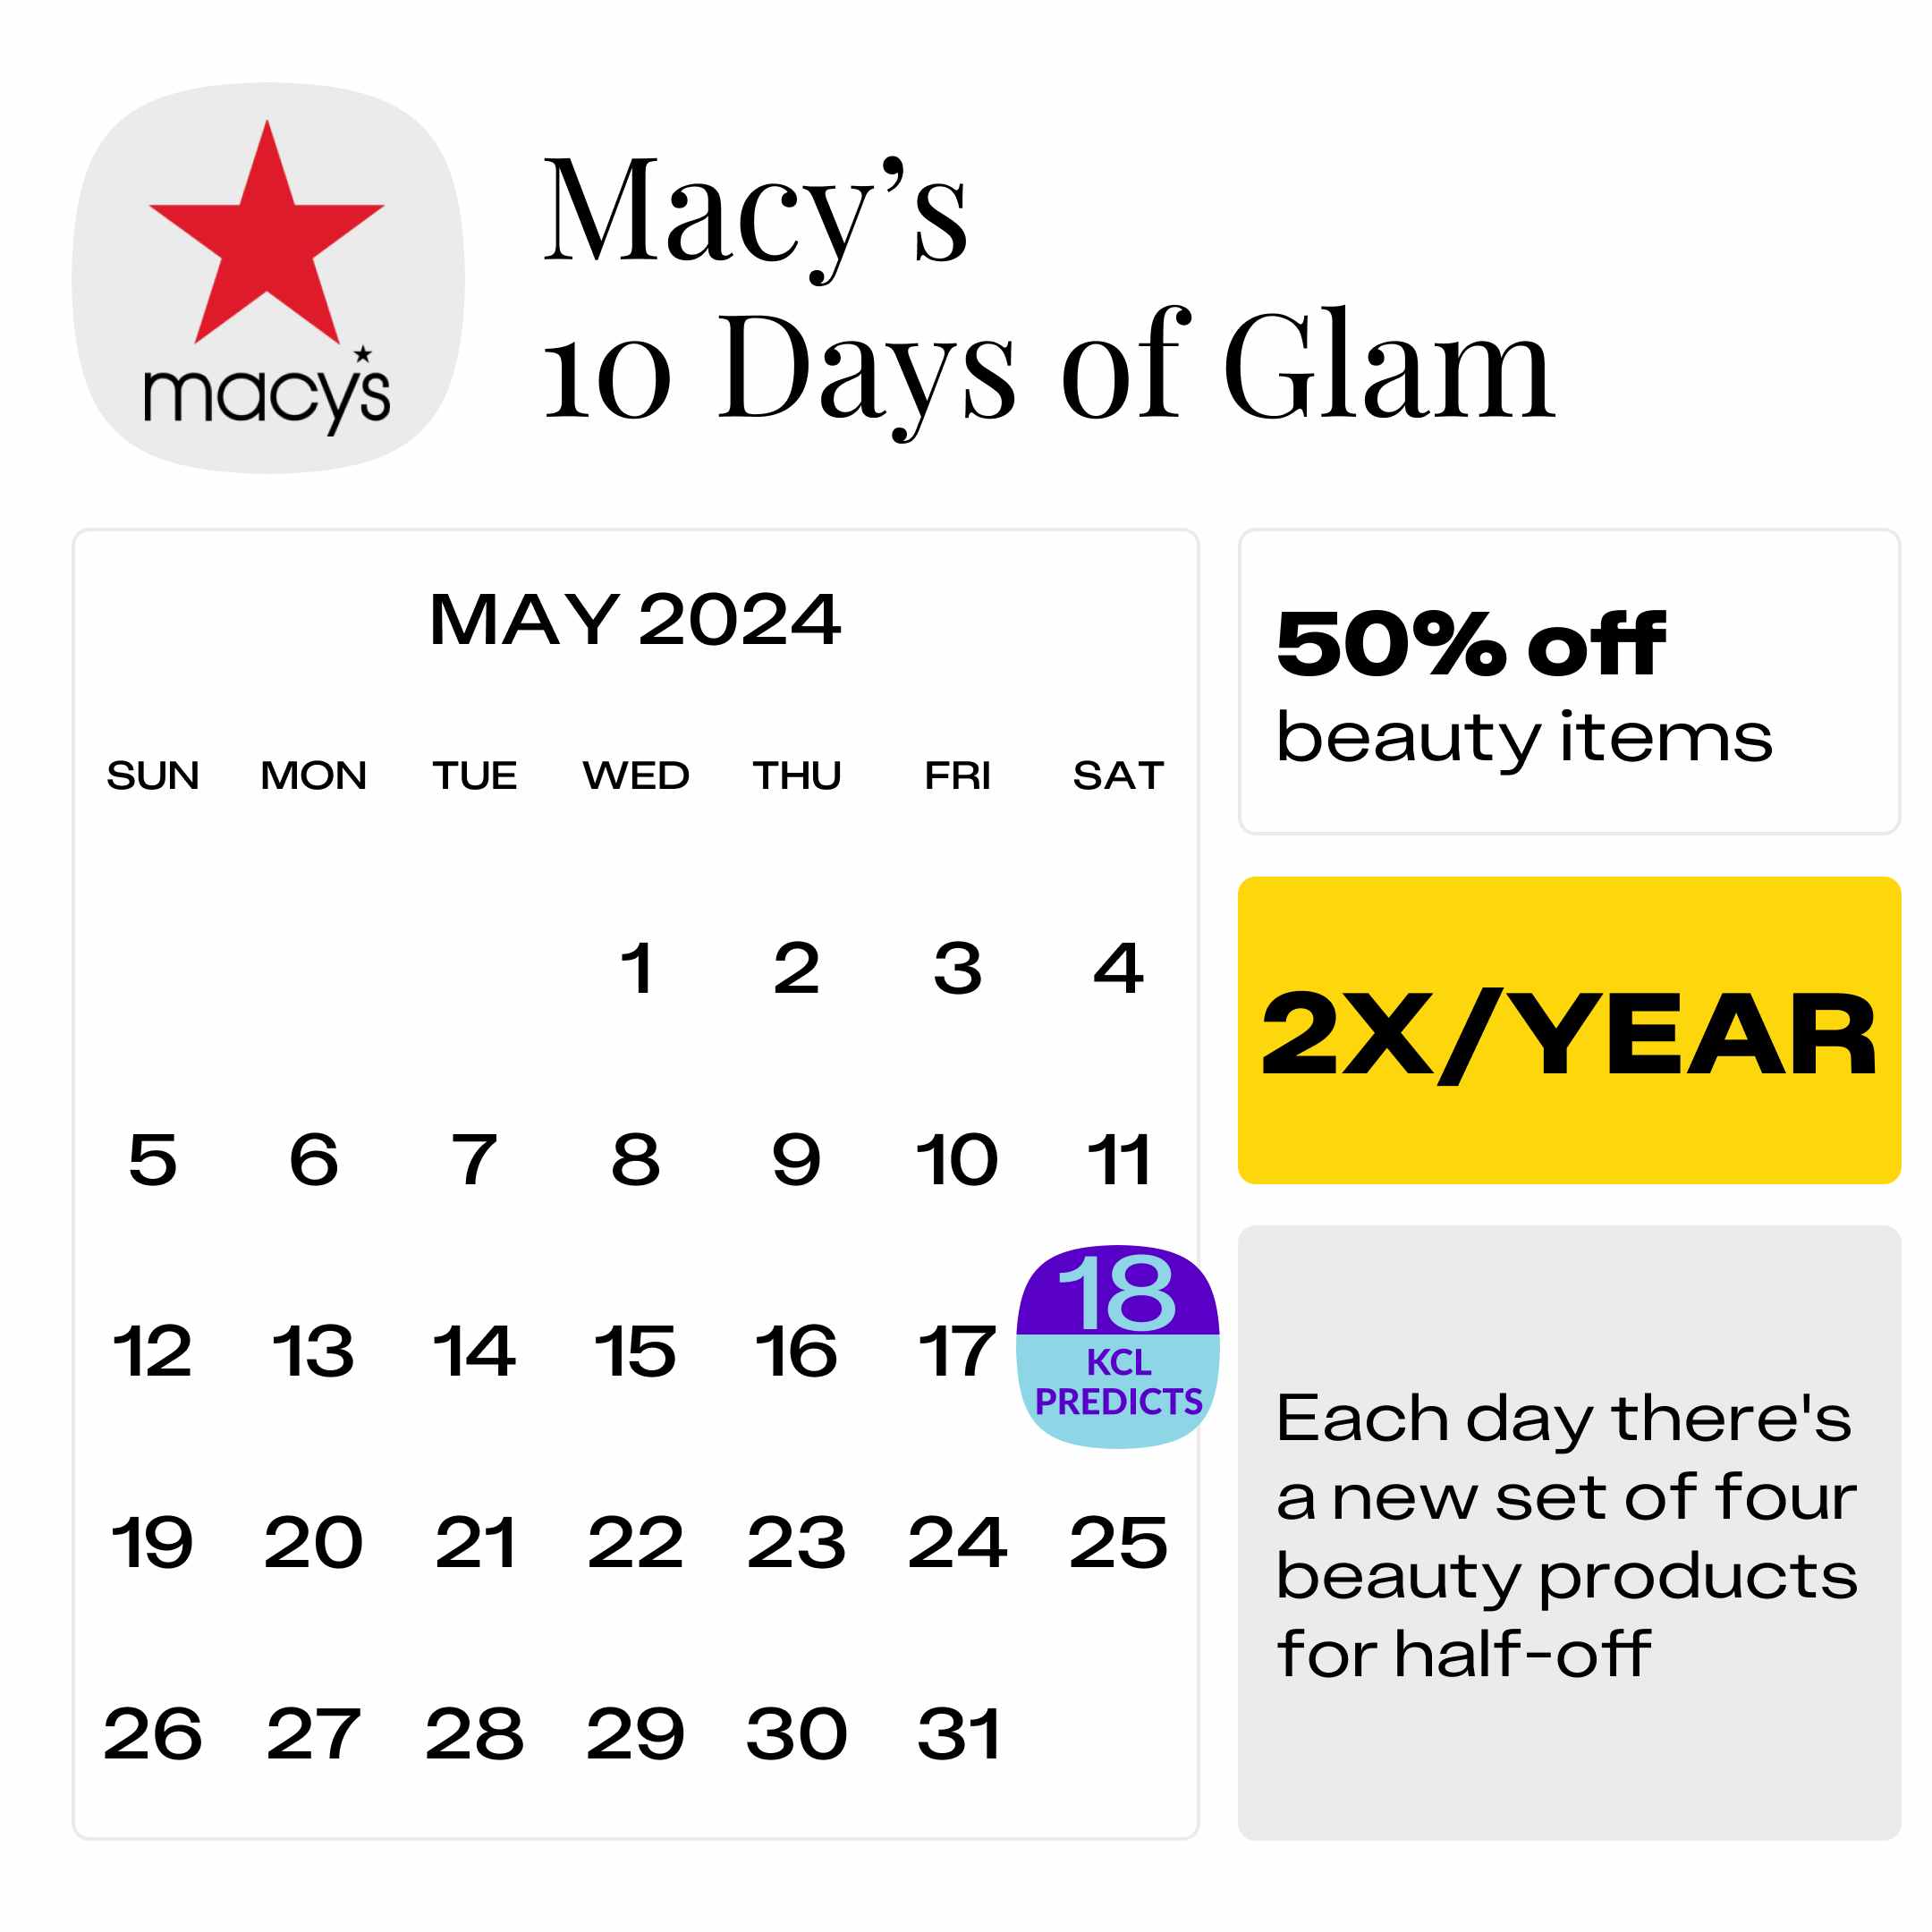 Macys-10-Days-of-Glam